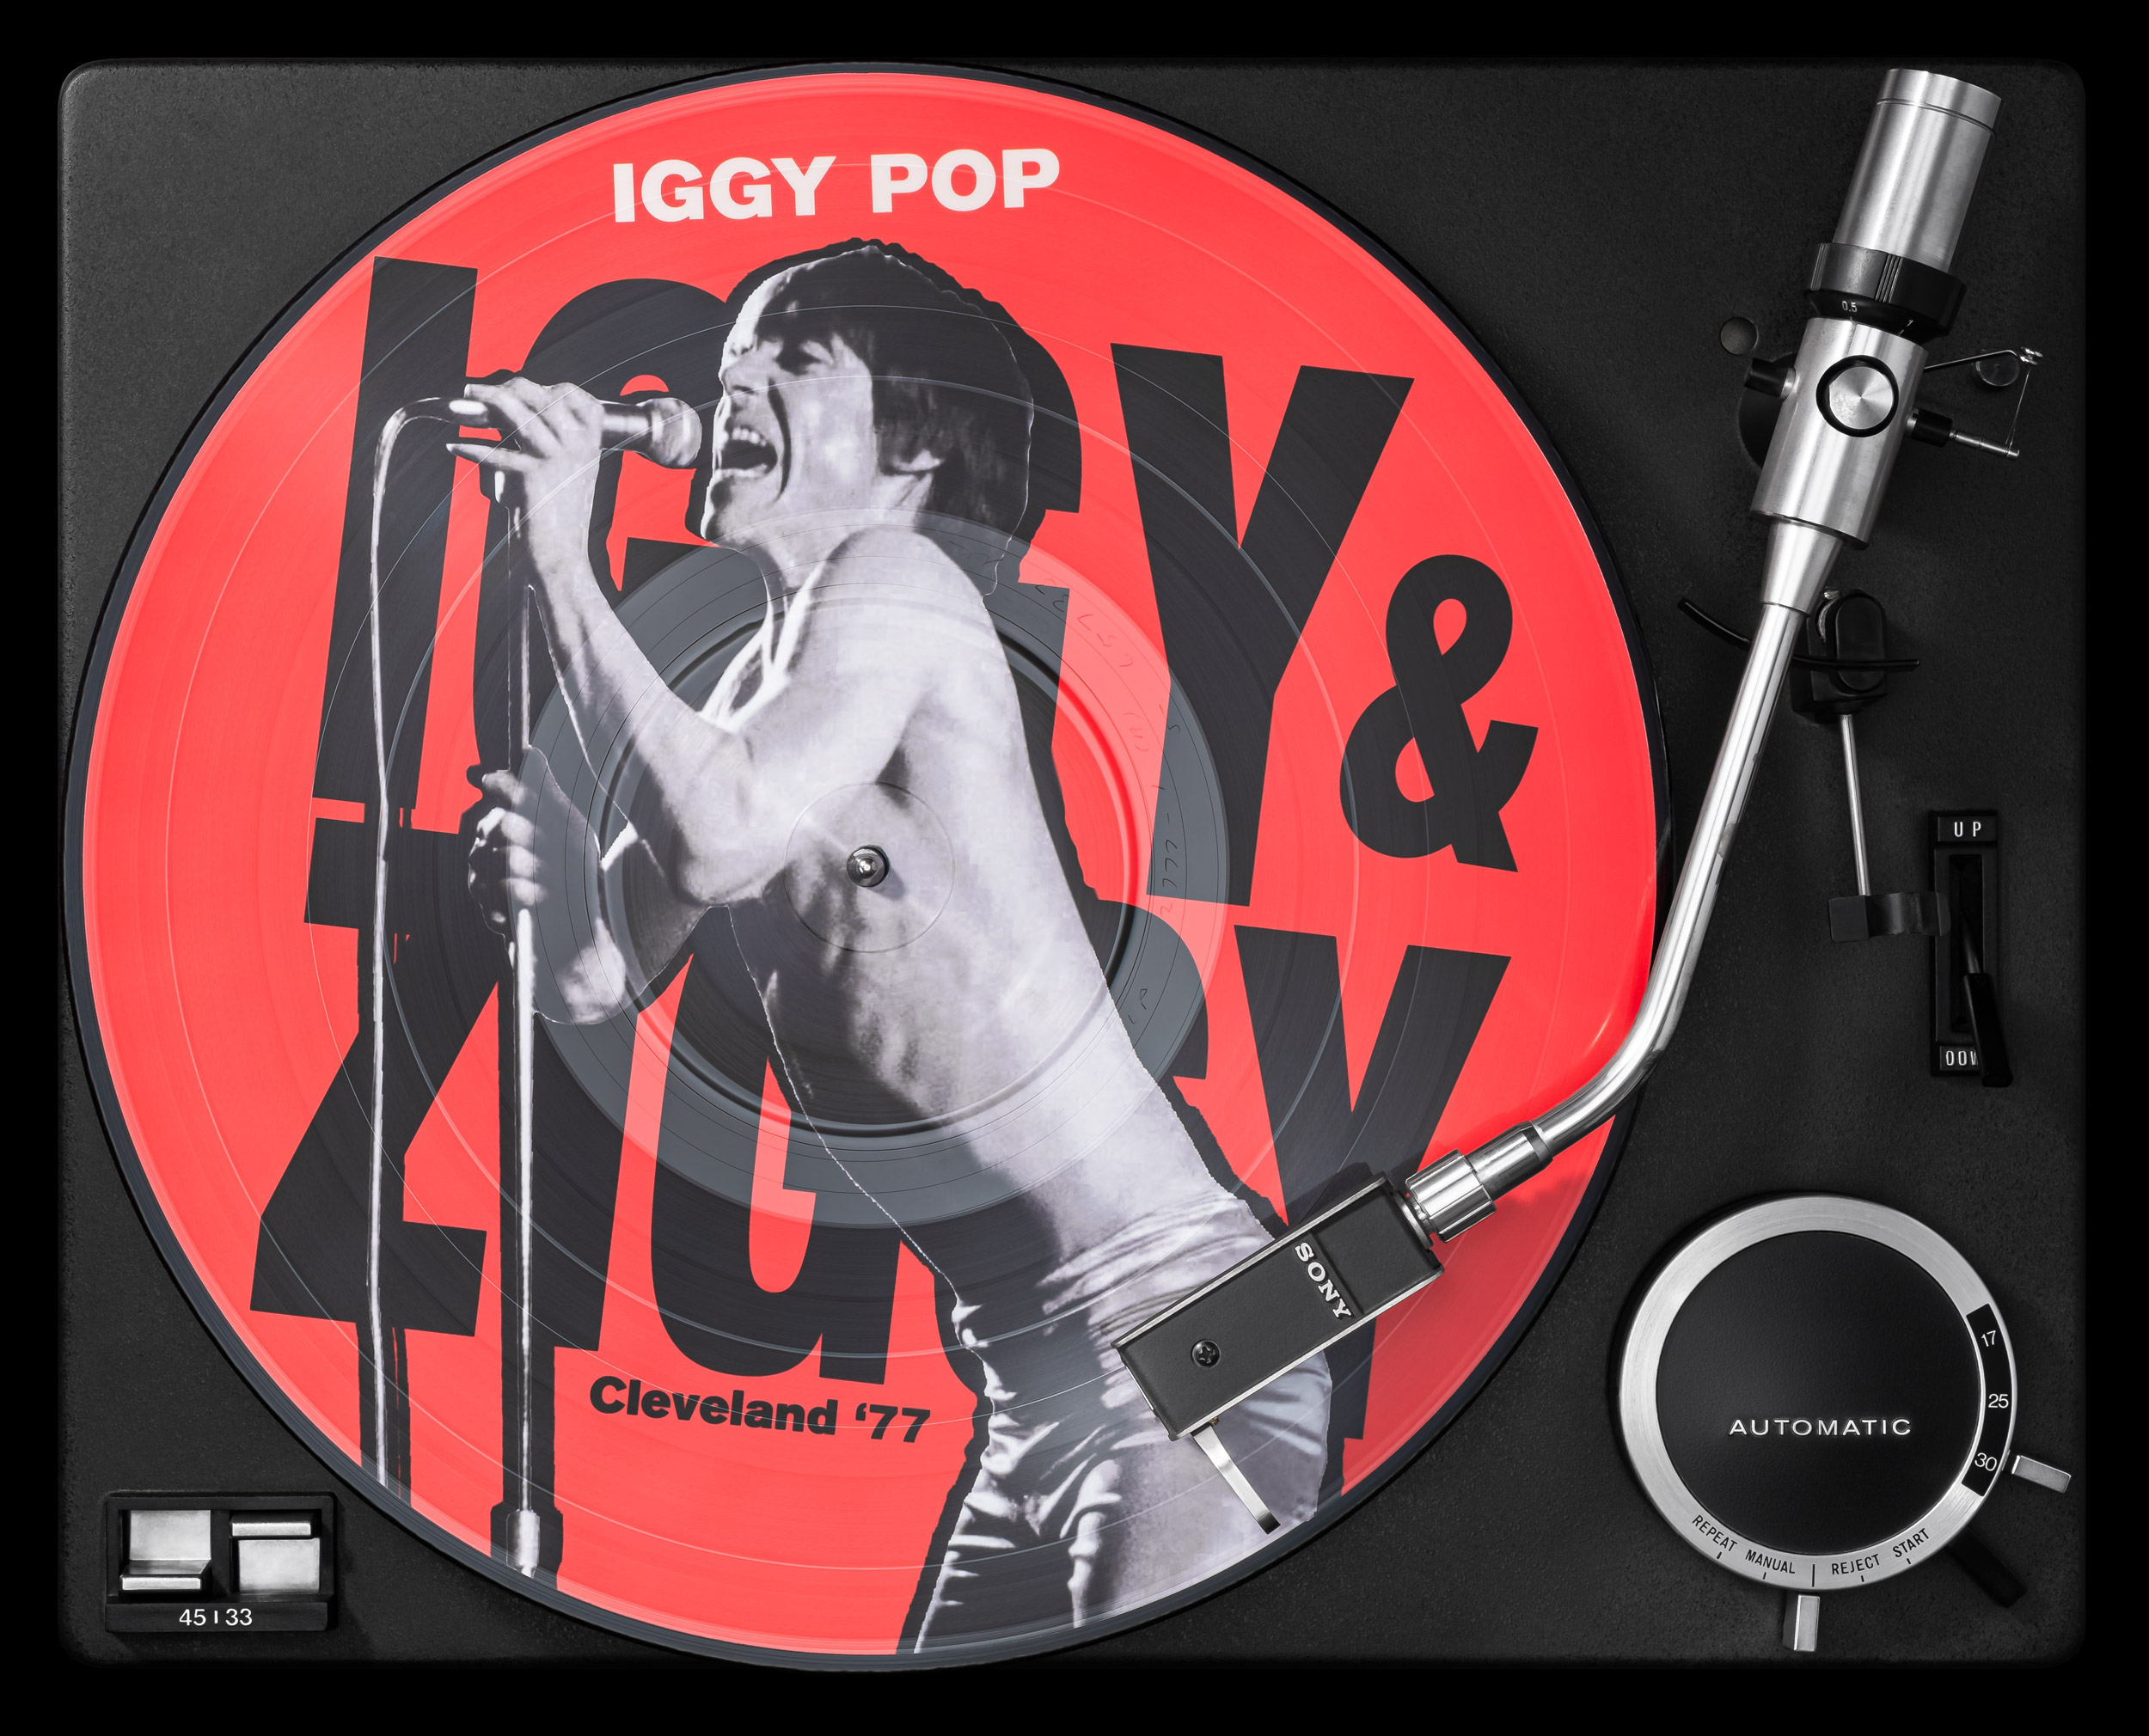 Vinylography No. 99 Iggy Pop Iggy & Ziggy Cleveland 77 on Sony 5520